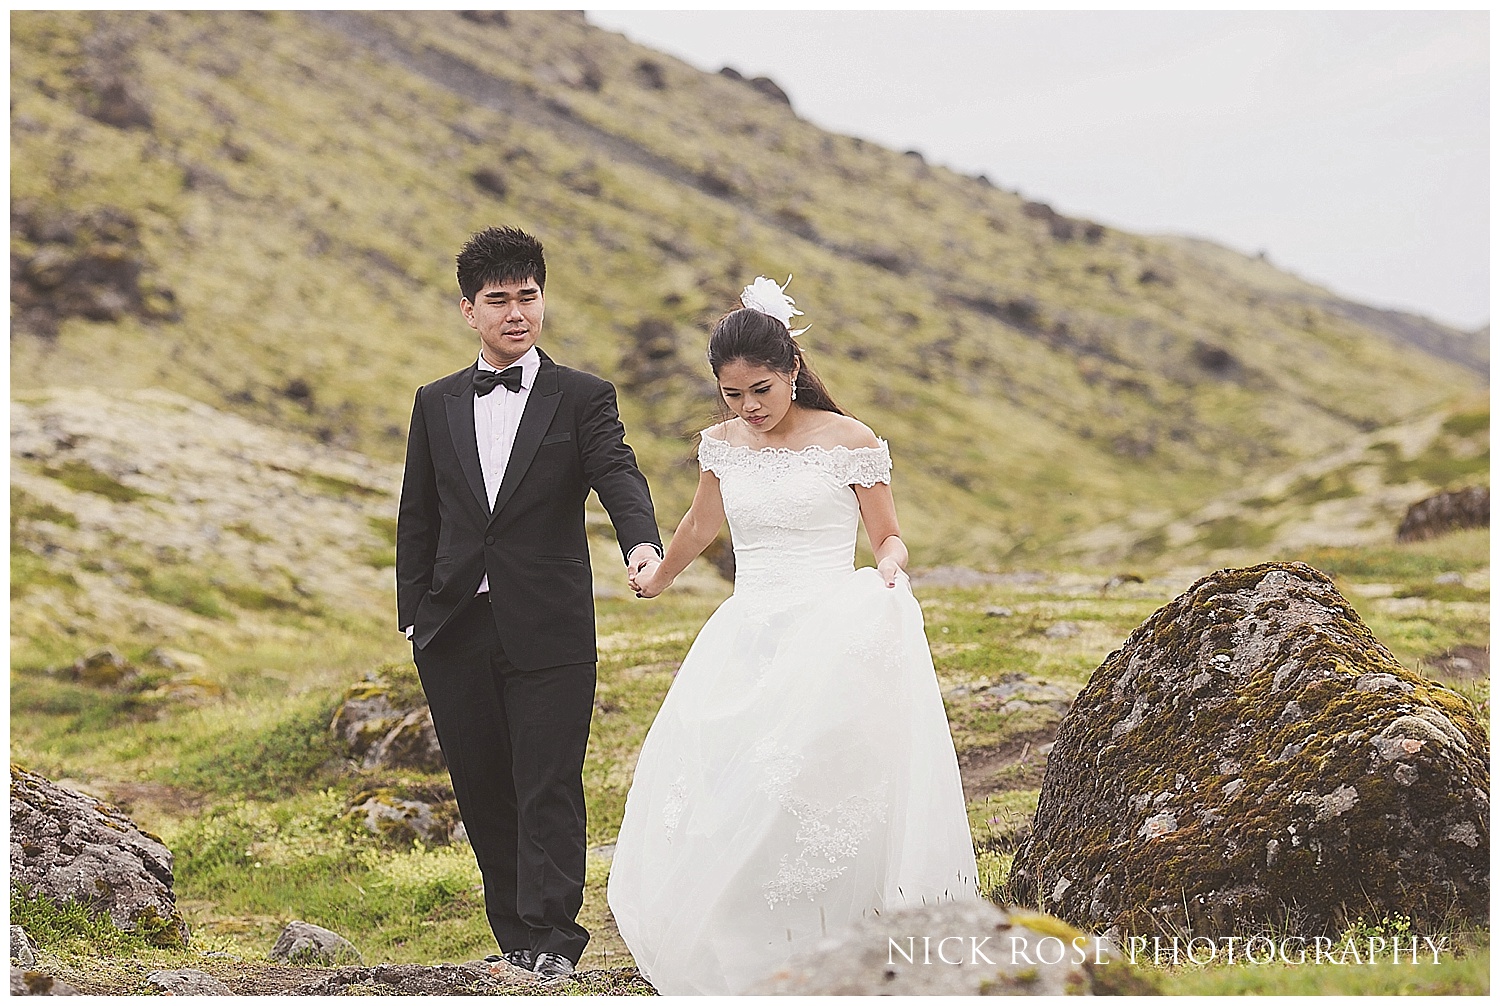 Destination pre wedding photographer in Iceland